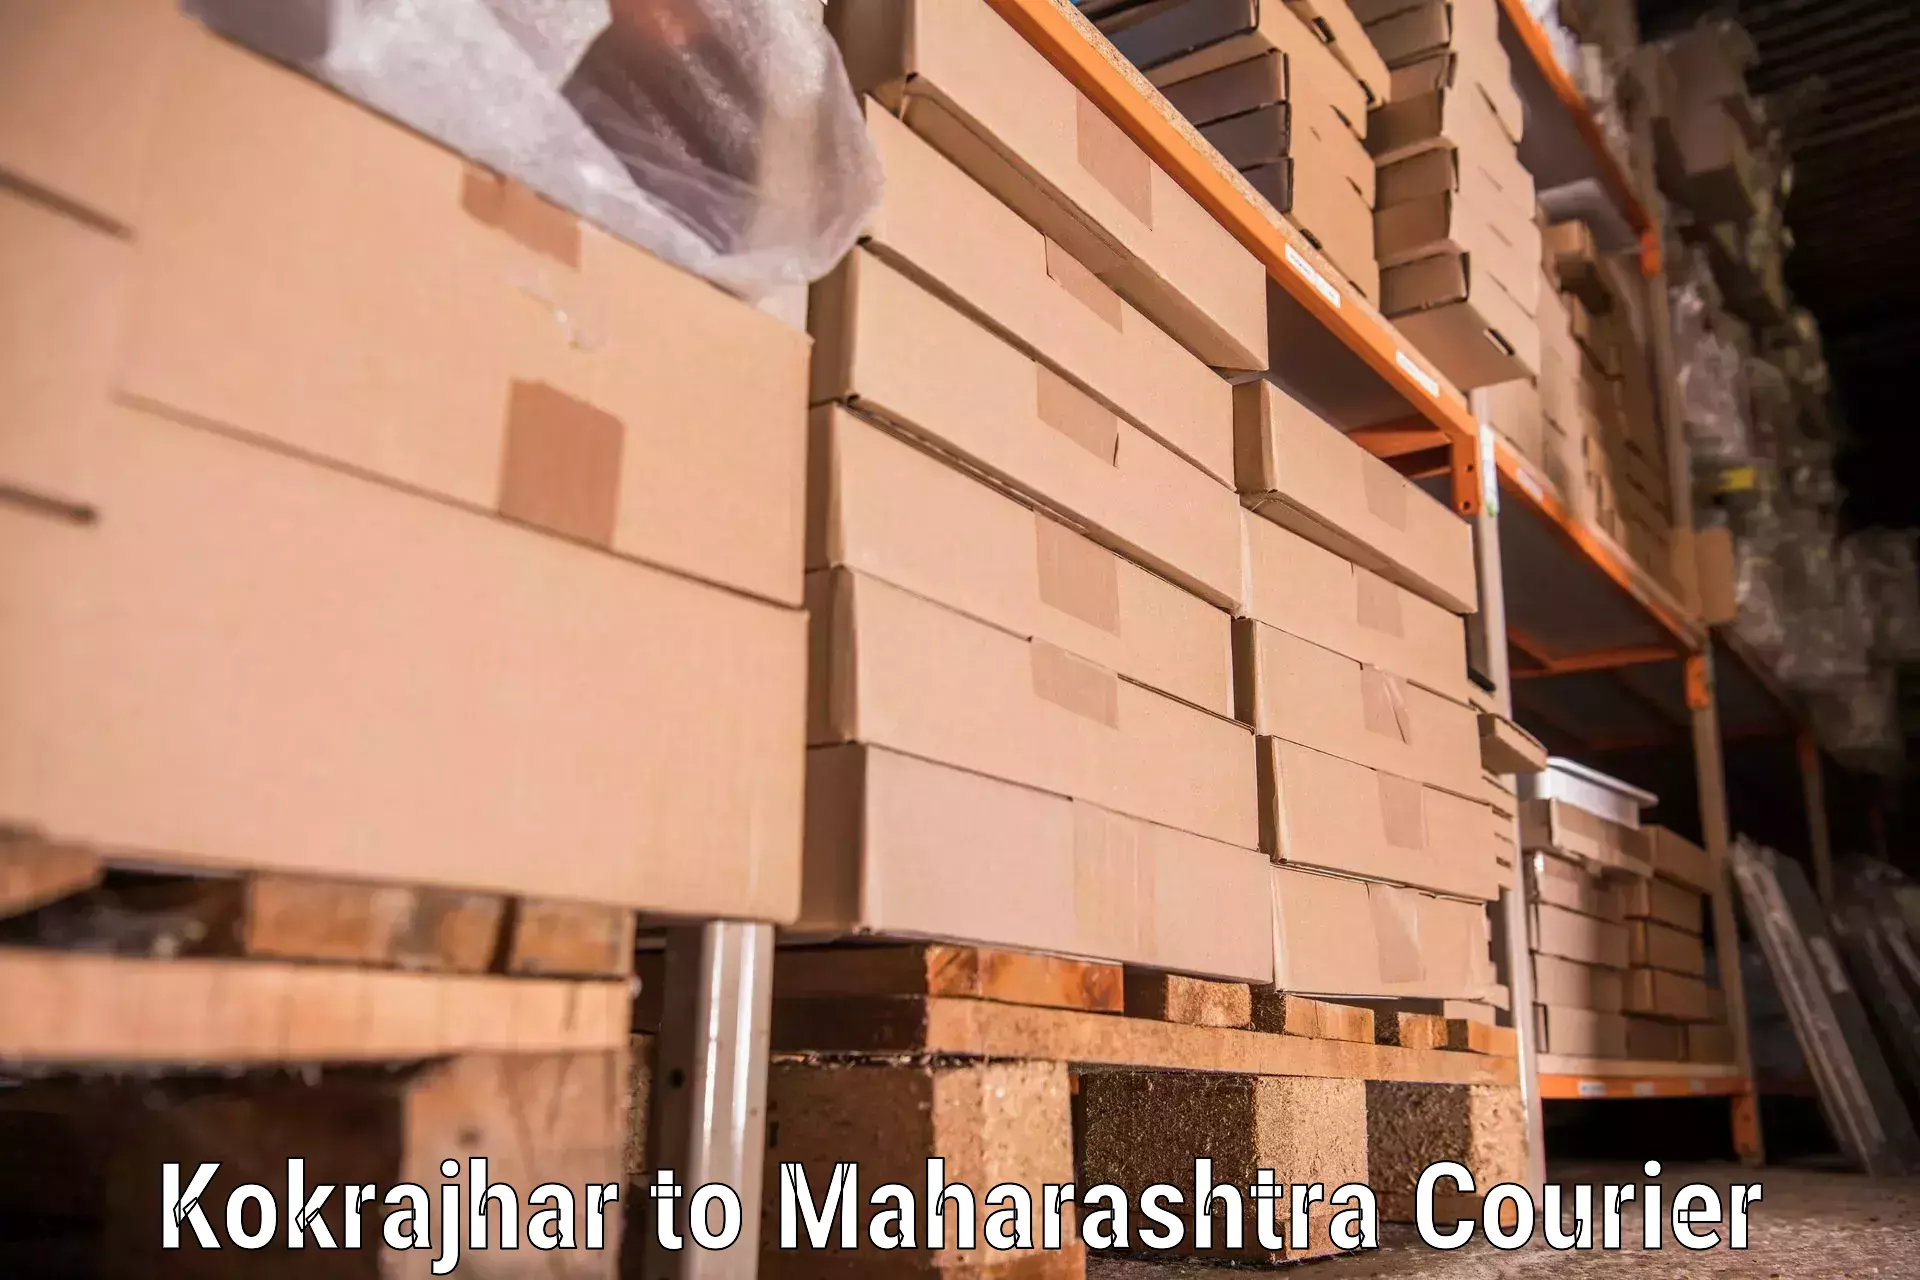 Professional moving company Kokrajhar to Khandala Pune